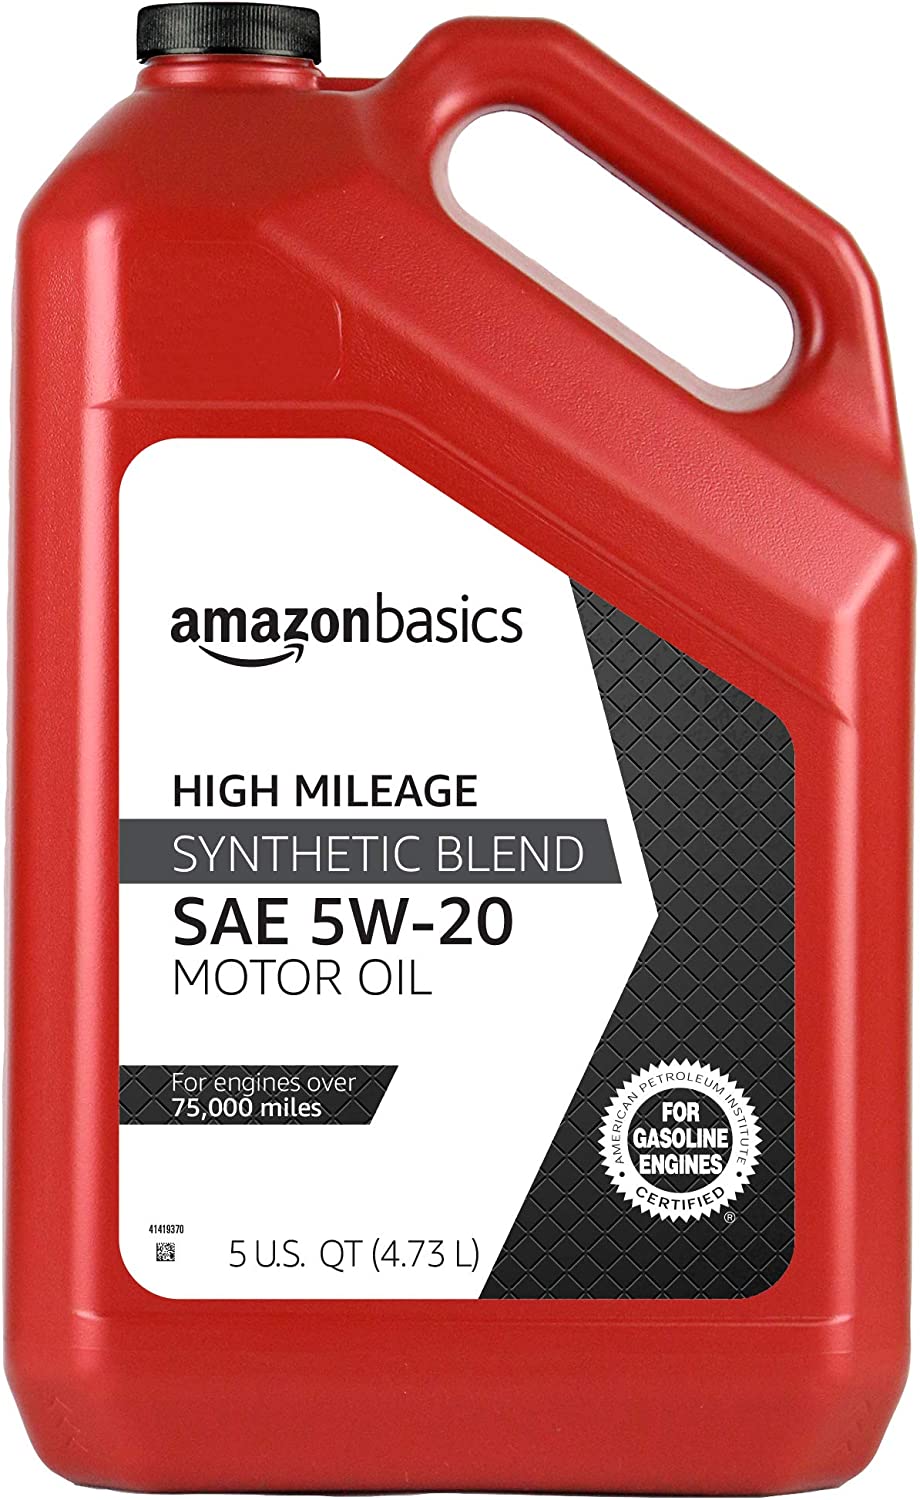 5-Qt Amazon Basics 5W-20 High Mileage Motor Oil - Synthetic Blend $11.54 shipped w/ Prime